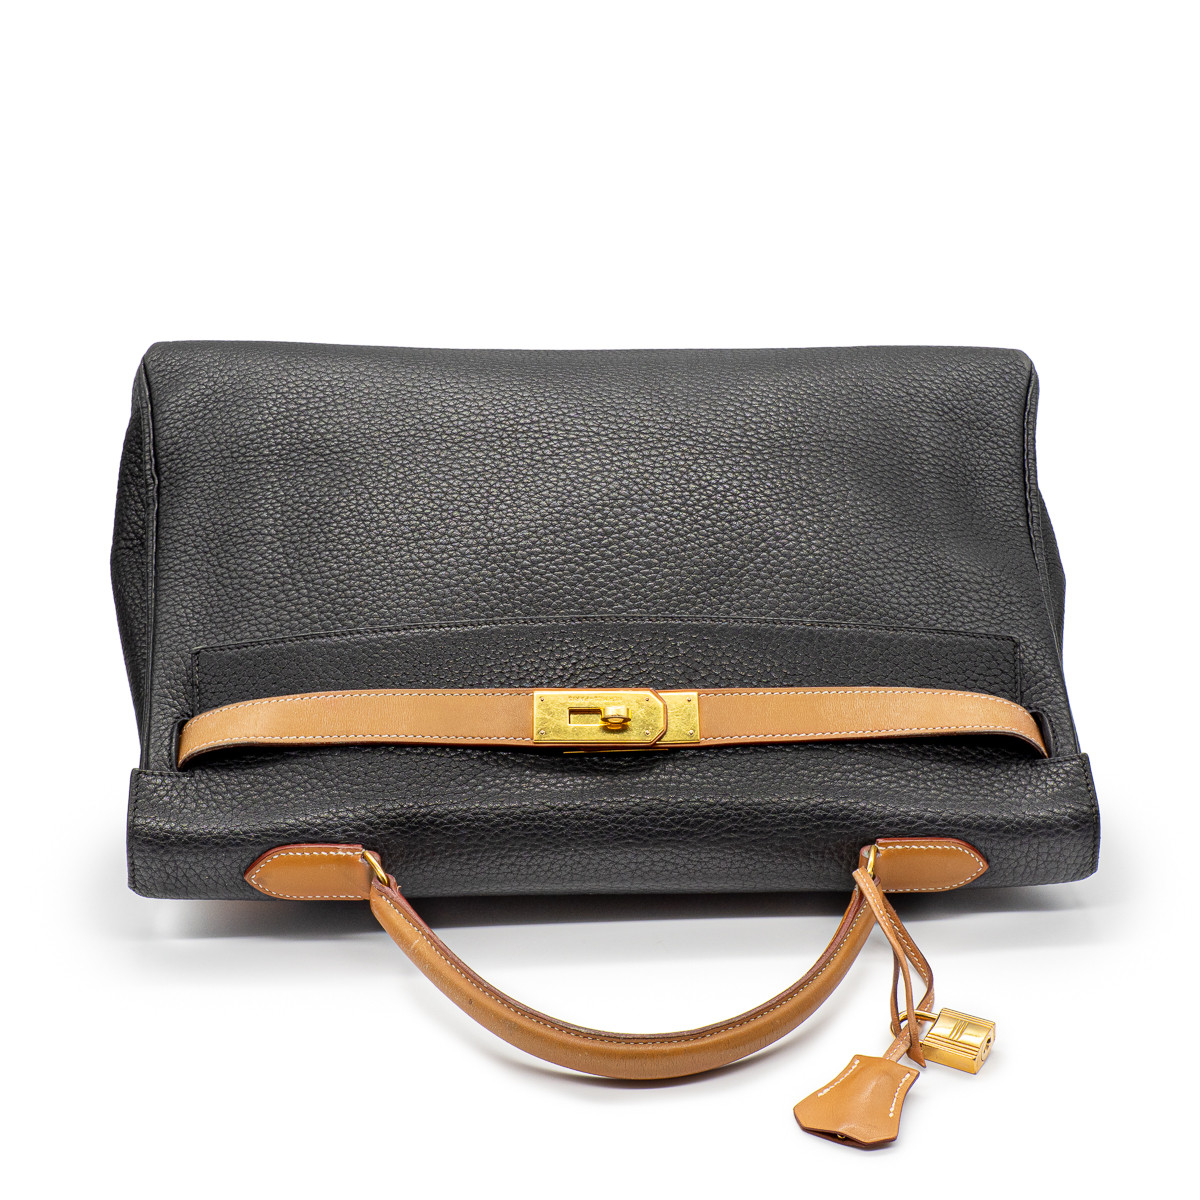 Hermès, Kelly 40 bag, Romy Schneider model in black grai…